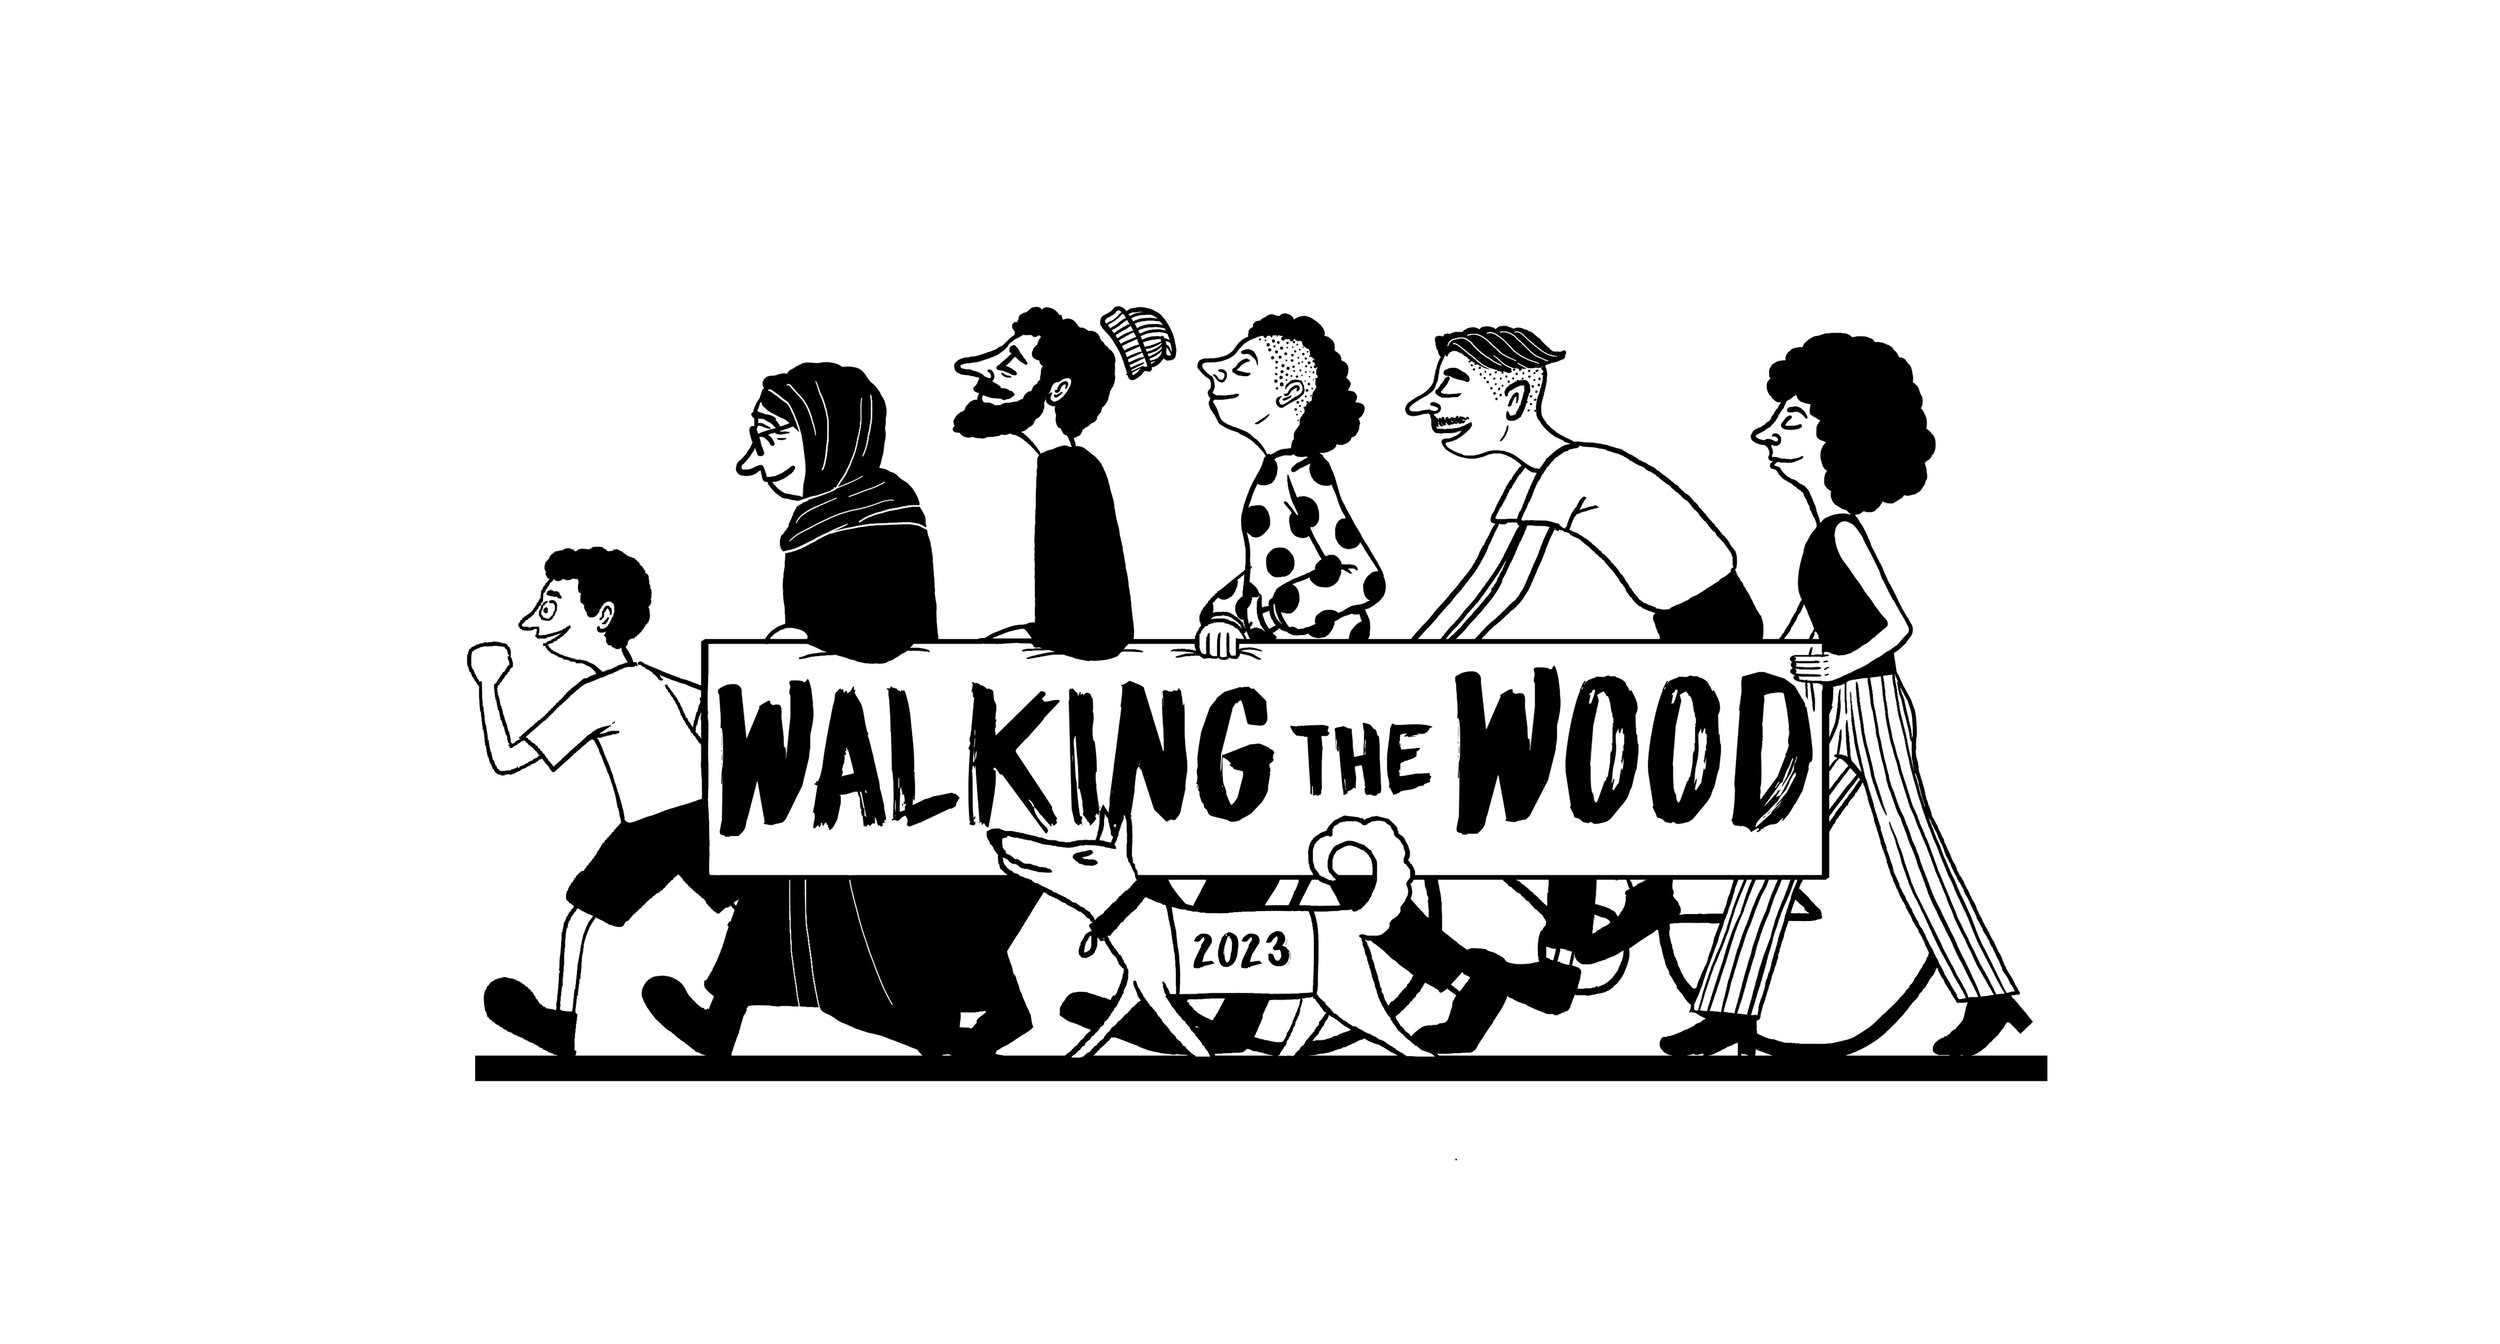 Walking the Wood